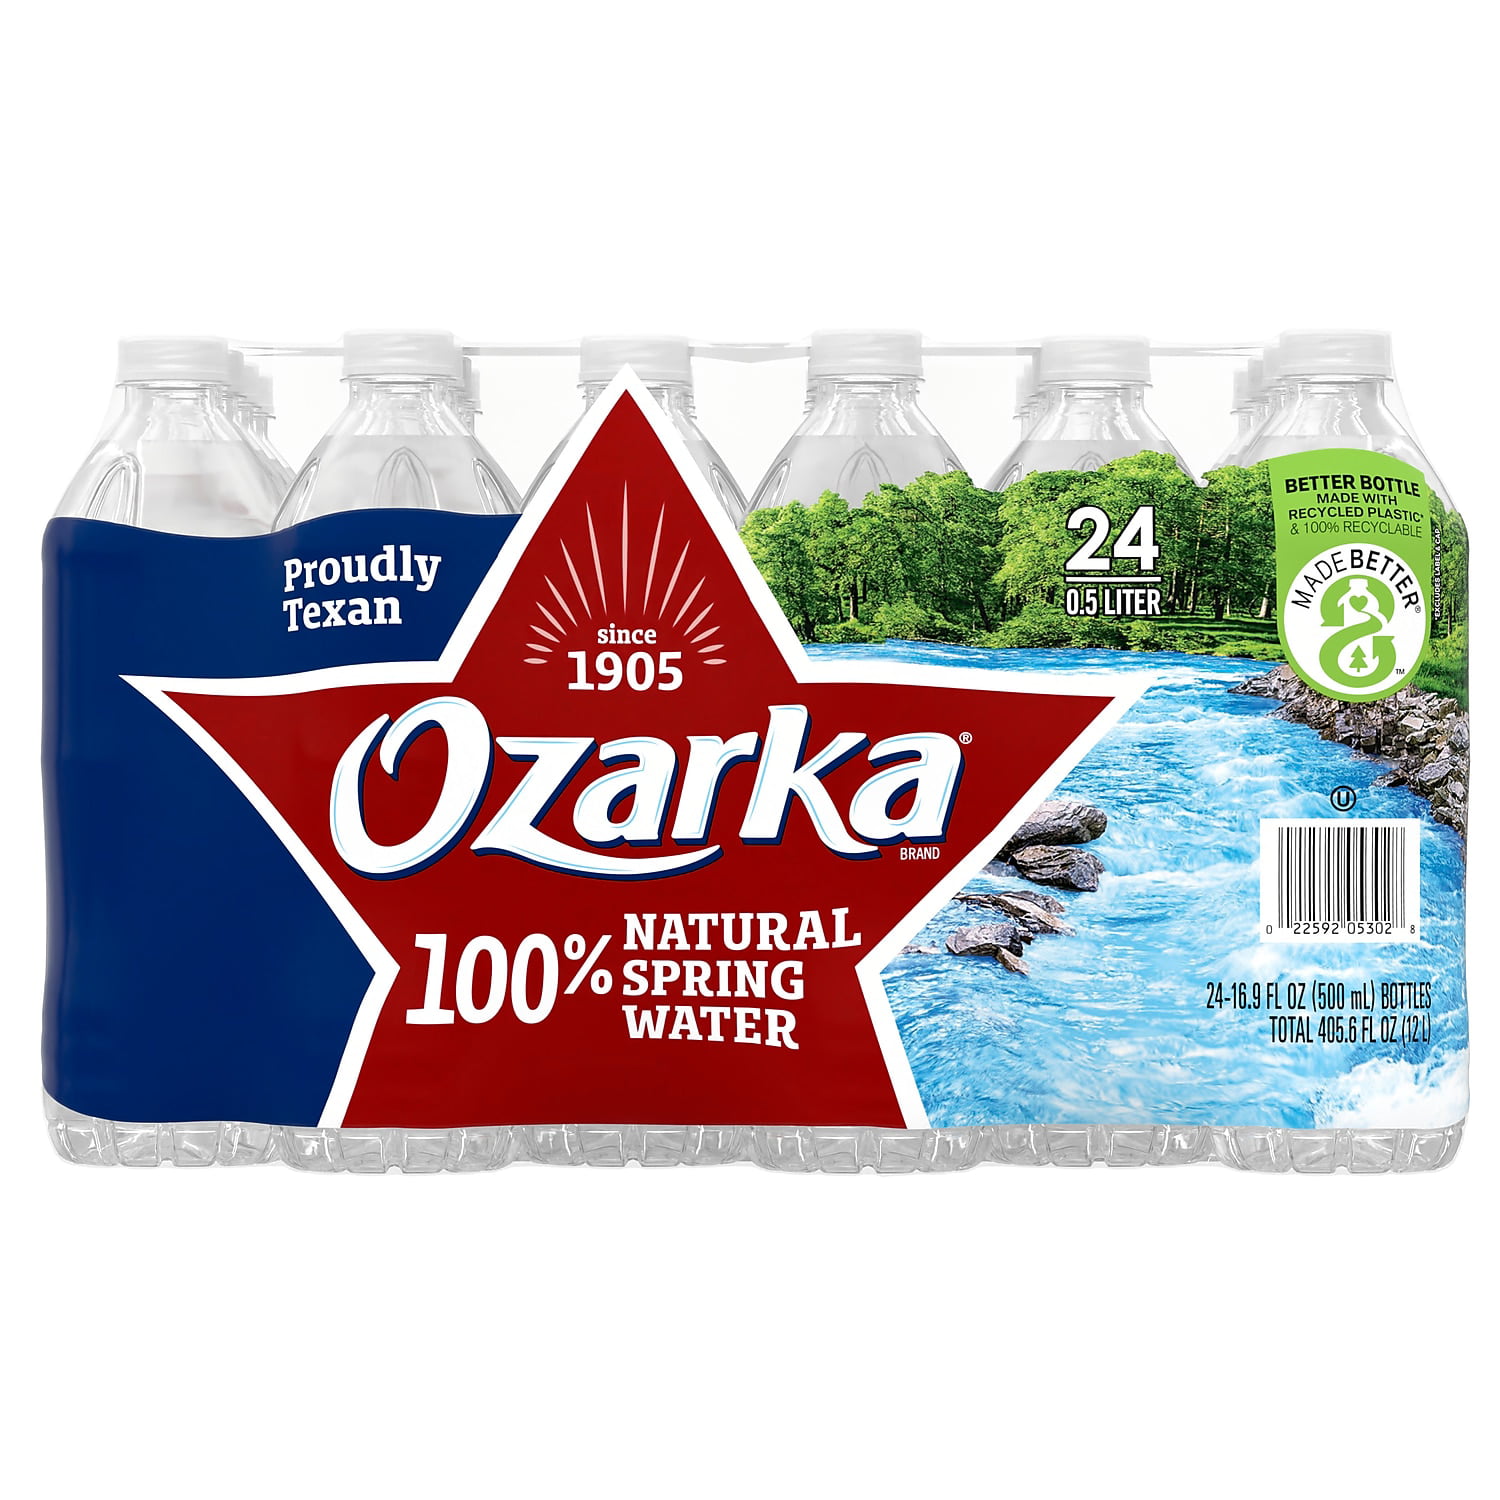 Ozarka 100% Natural Spring Water 16.91 Oz. 022592053028 - 1